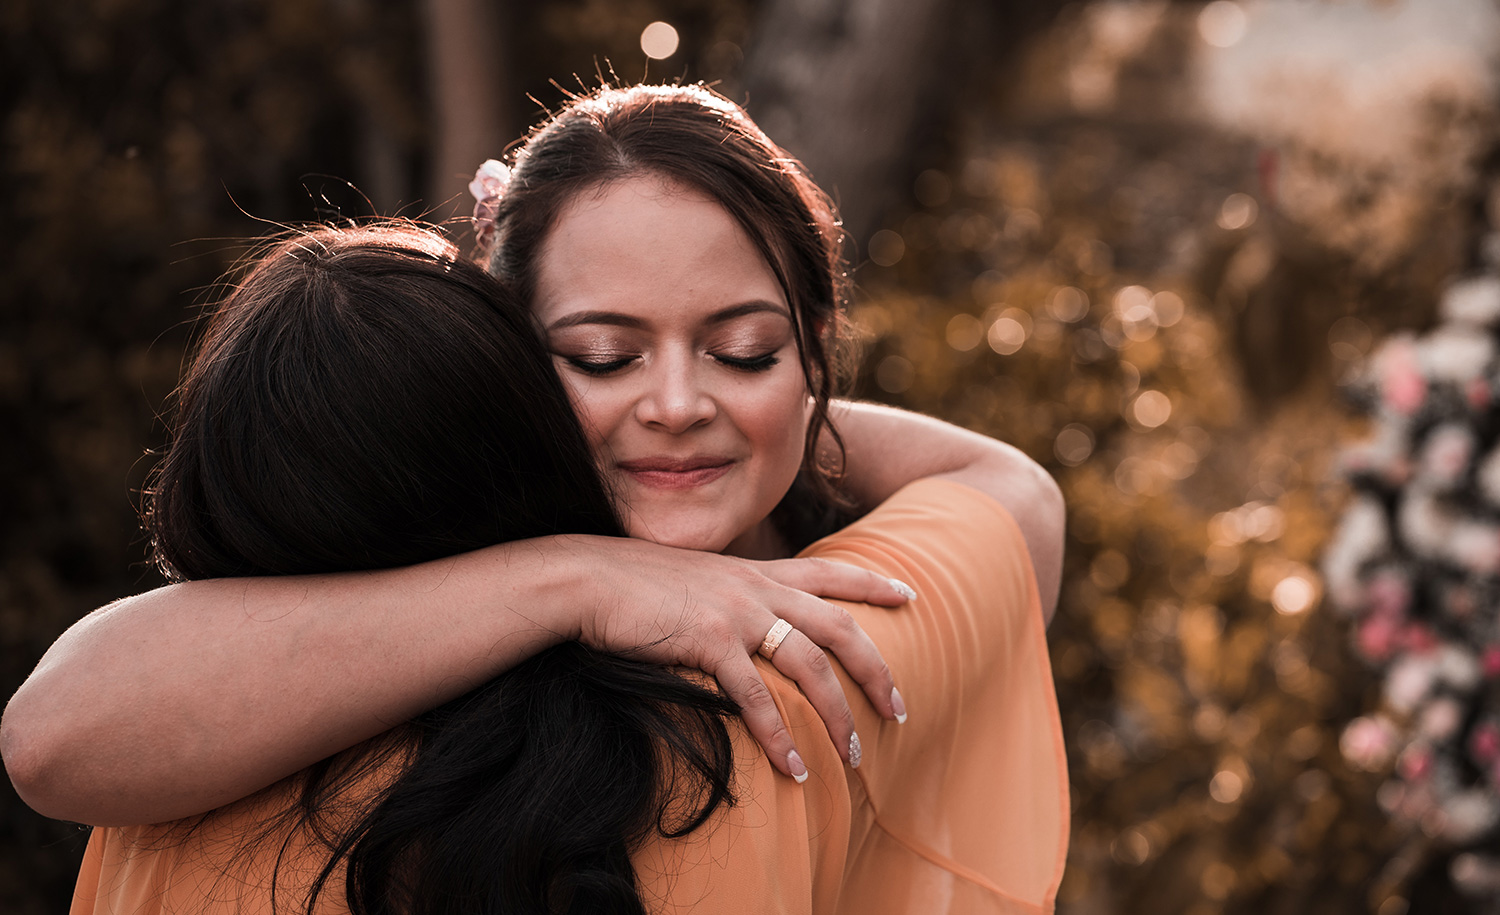 A highly sensitive person hugs a friend